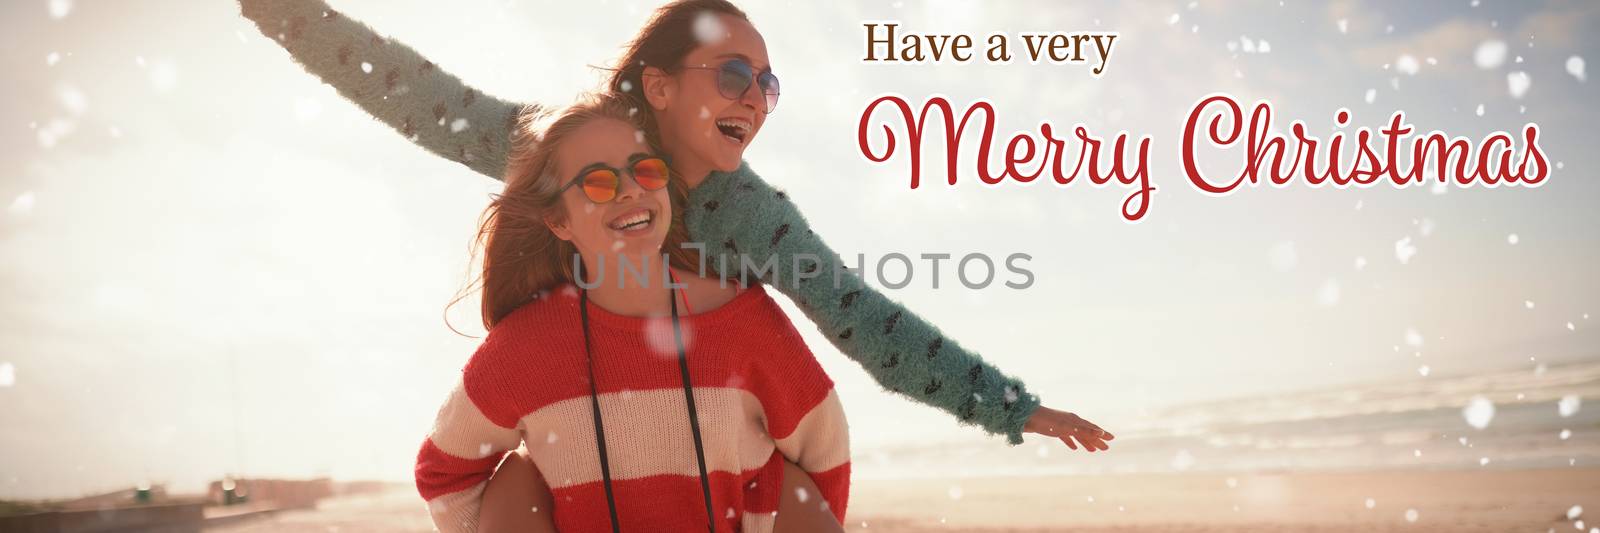 Christmas card against female best friends giving piggy back in beach